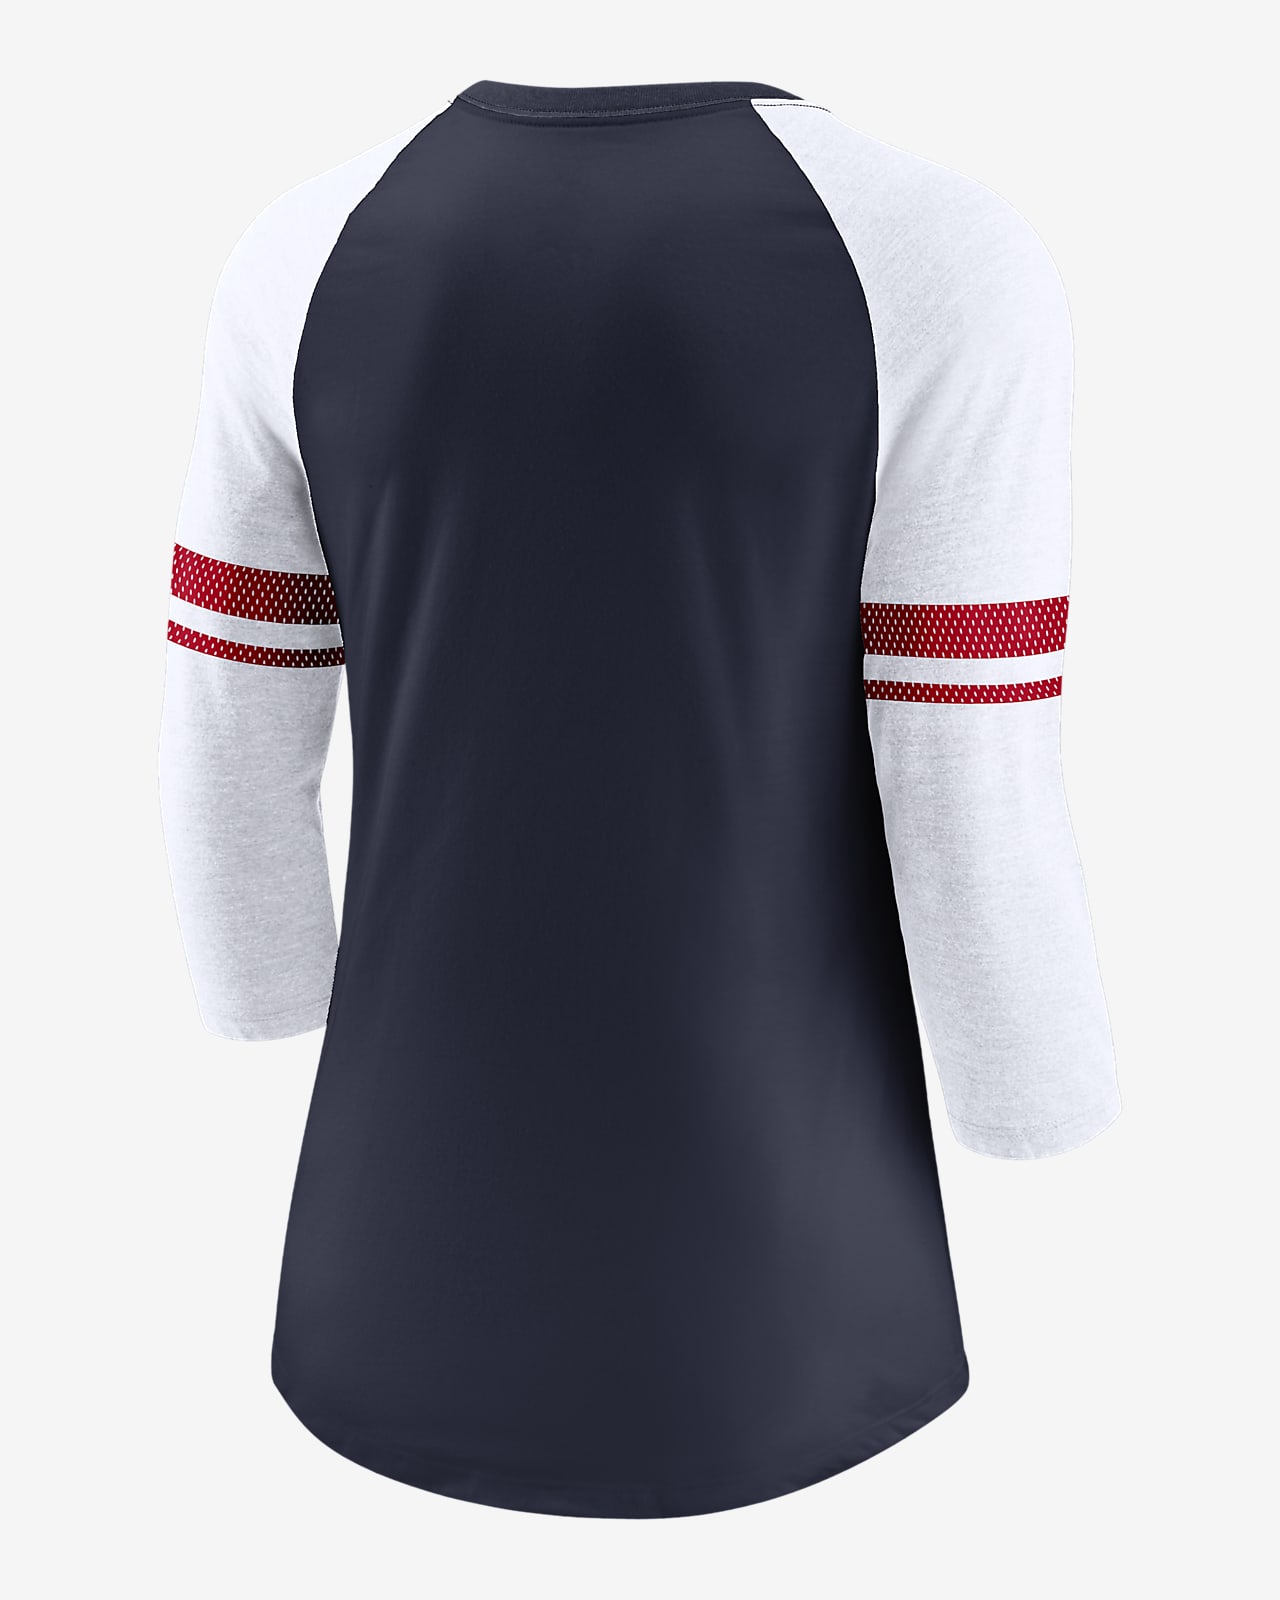 Nike Fashion (NFL New England Patriots) Women's 3/4-Sleeve T-Shirt